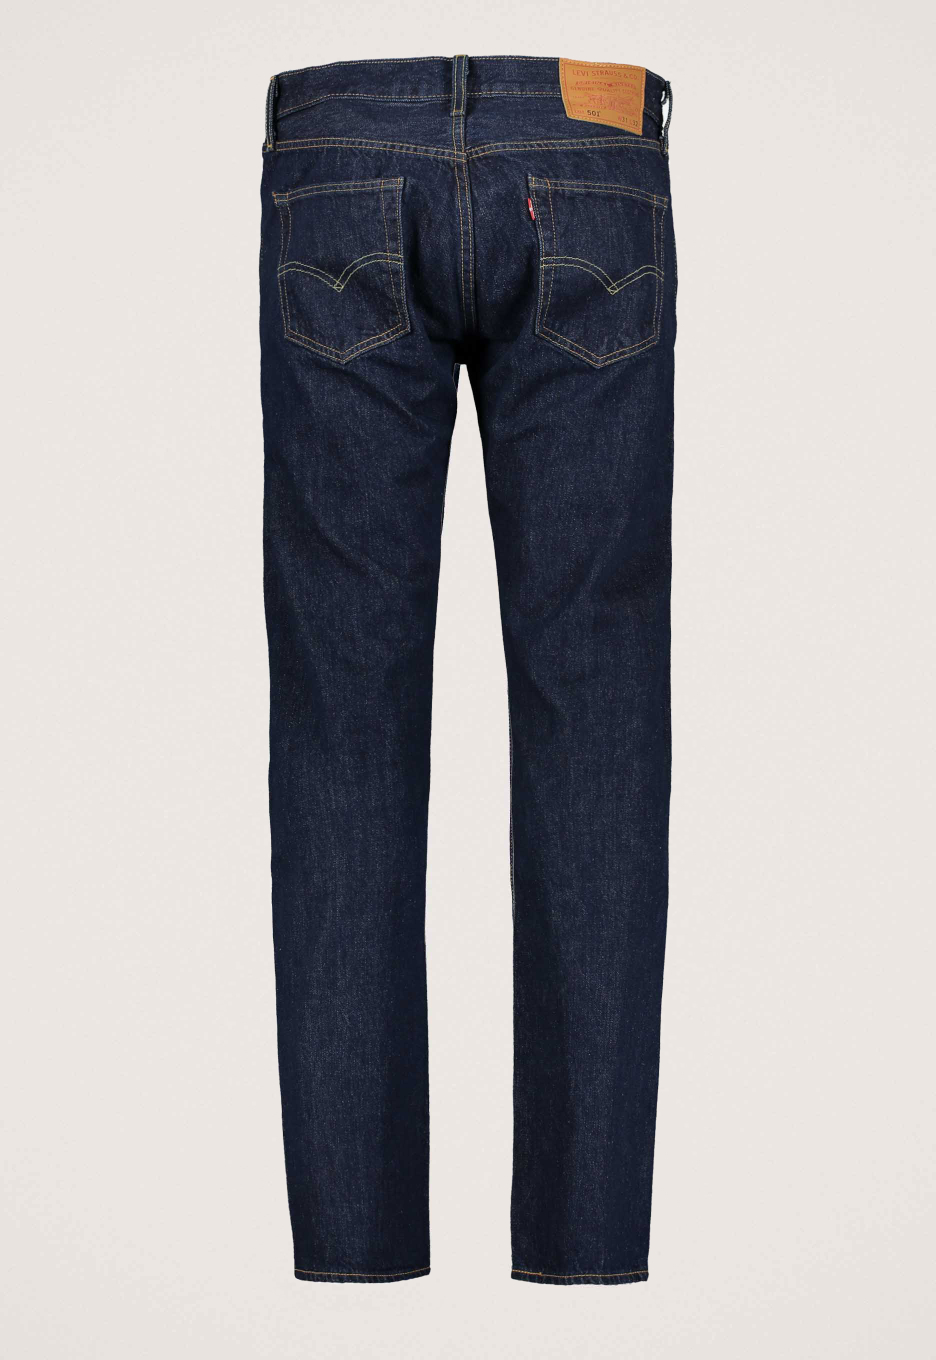 Levi's 501 Original Straight Jeans Onewash | Open32.nl